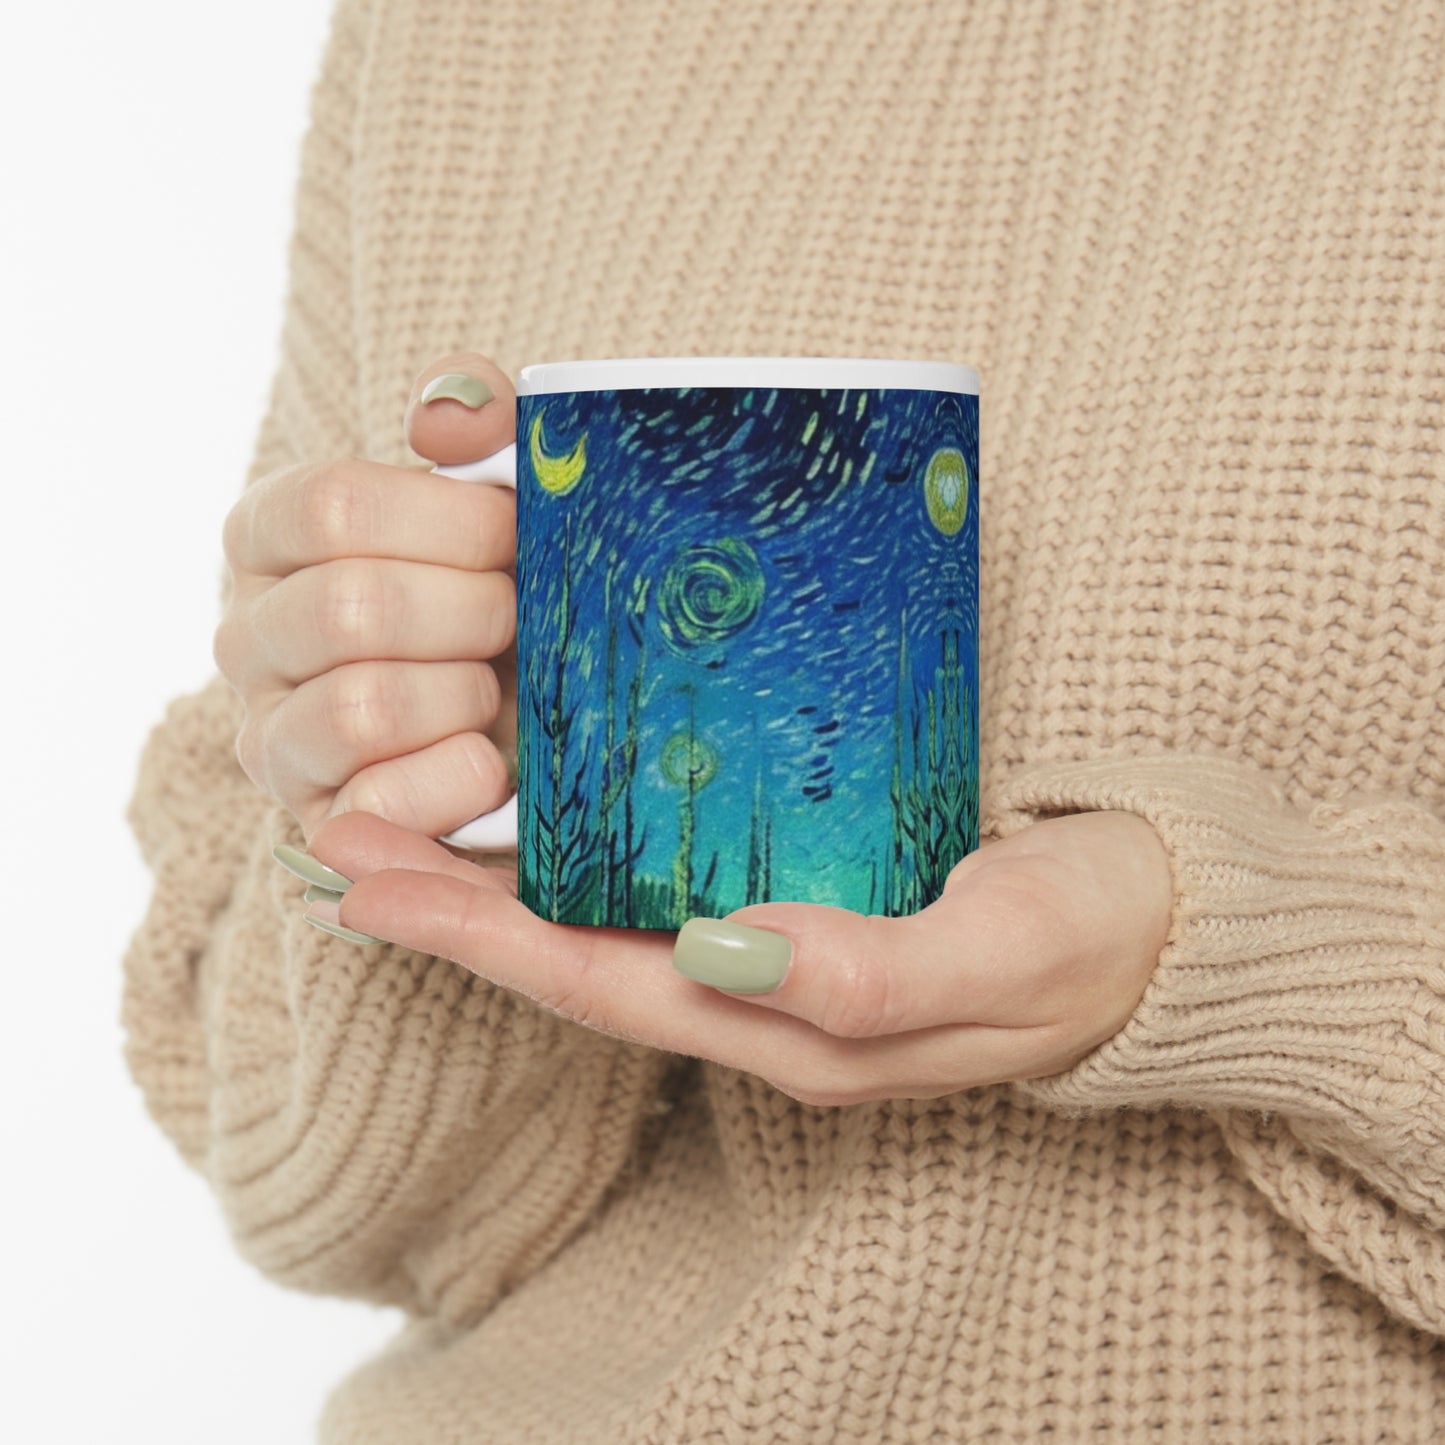 Starry Forest Painting Expressionist Hot Beverage Coffee Tea Decorative Ceramic Mug 11oz